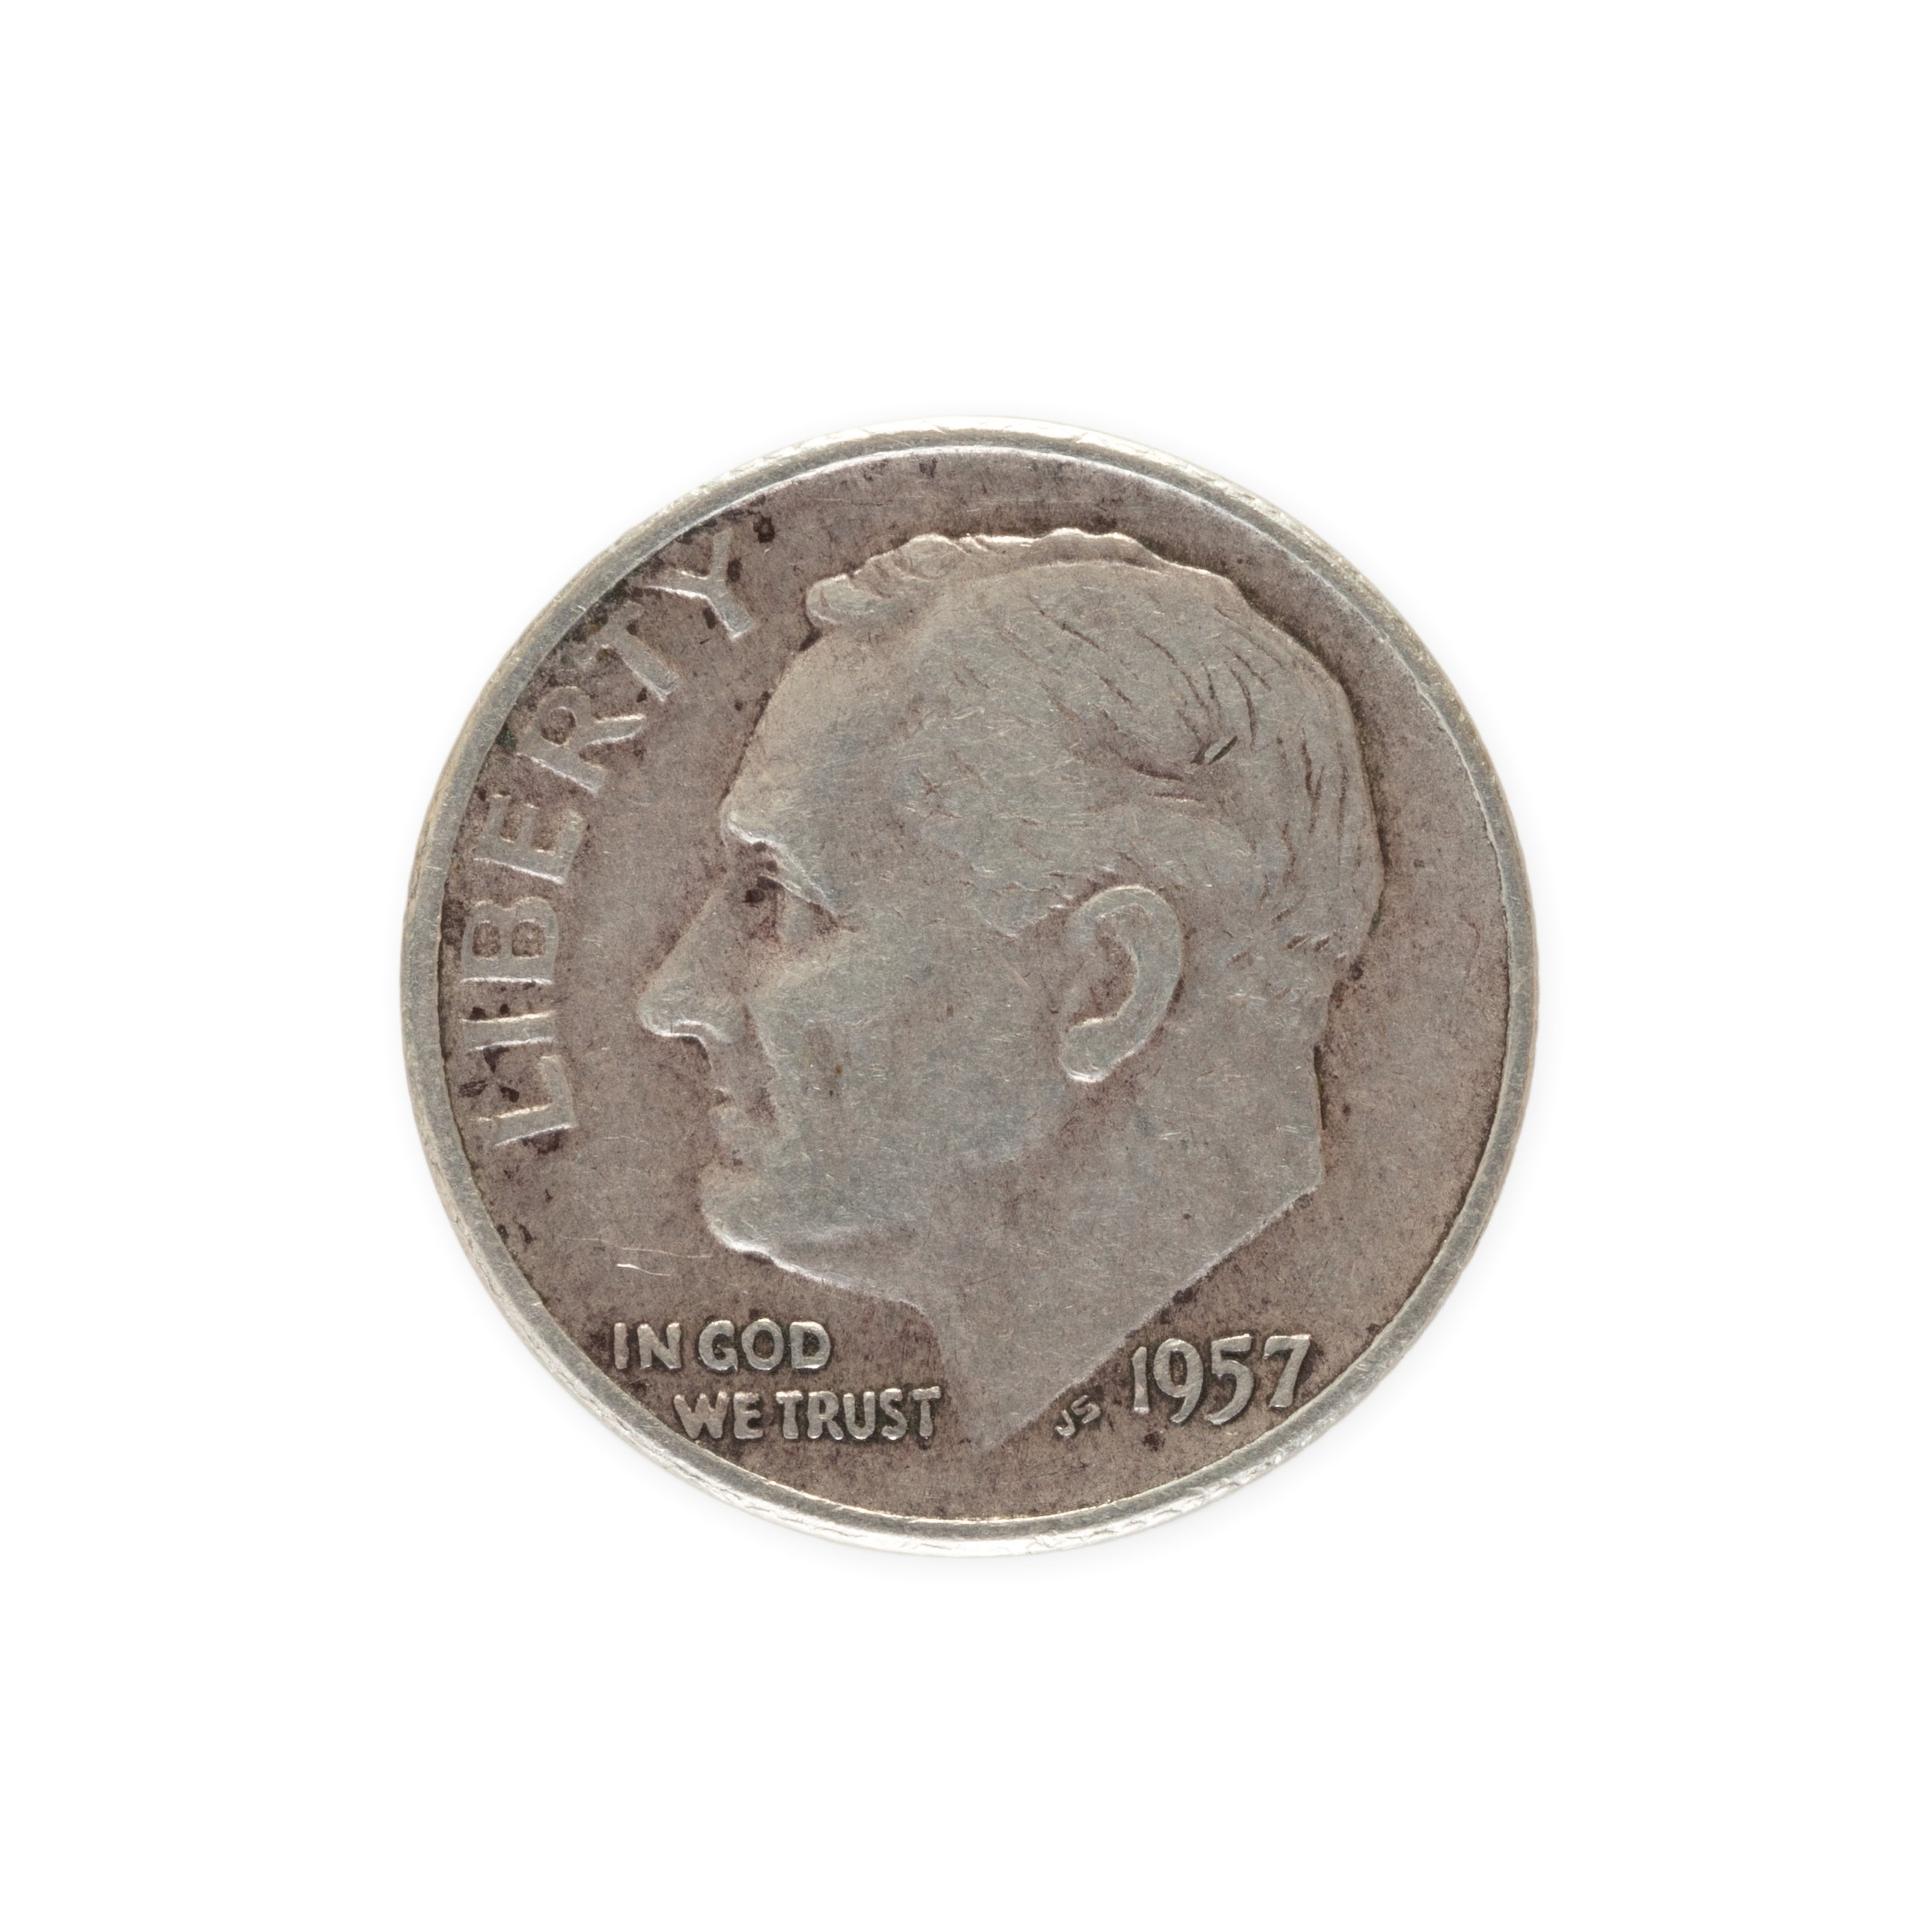 USA One Dime coin